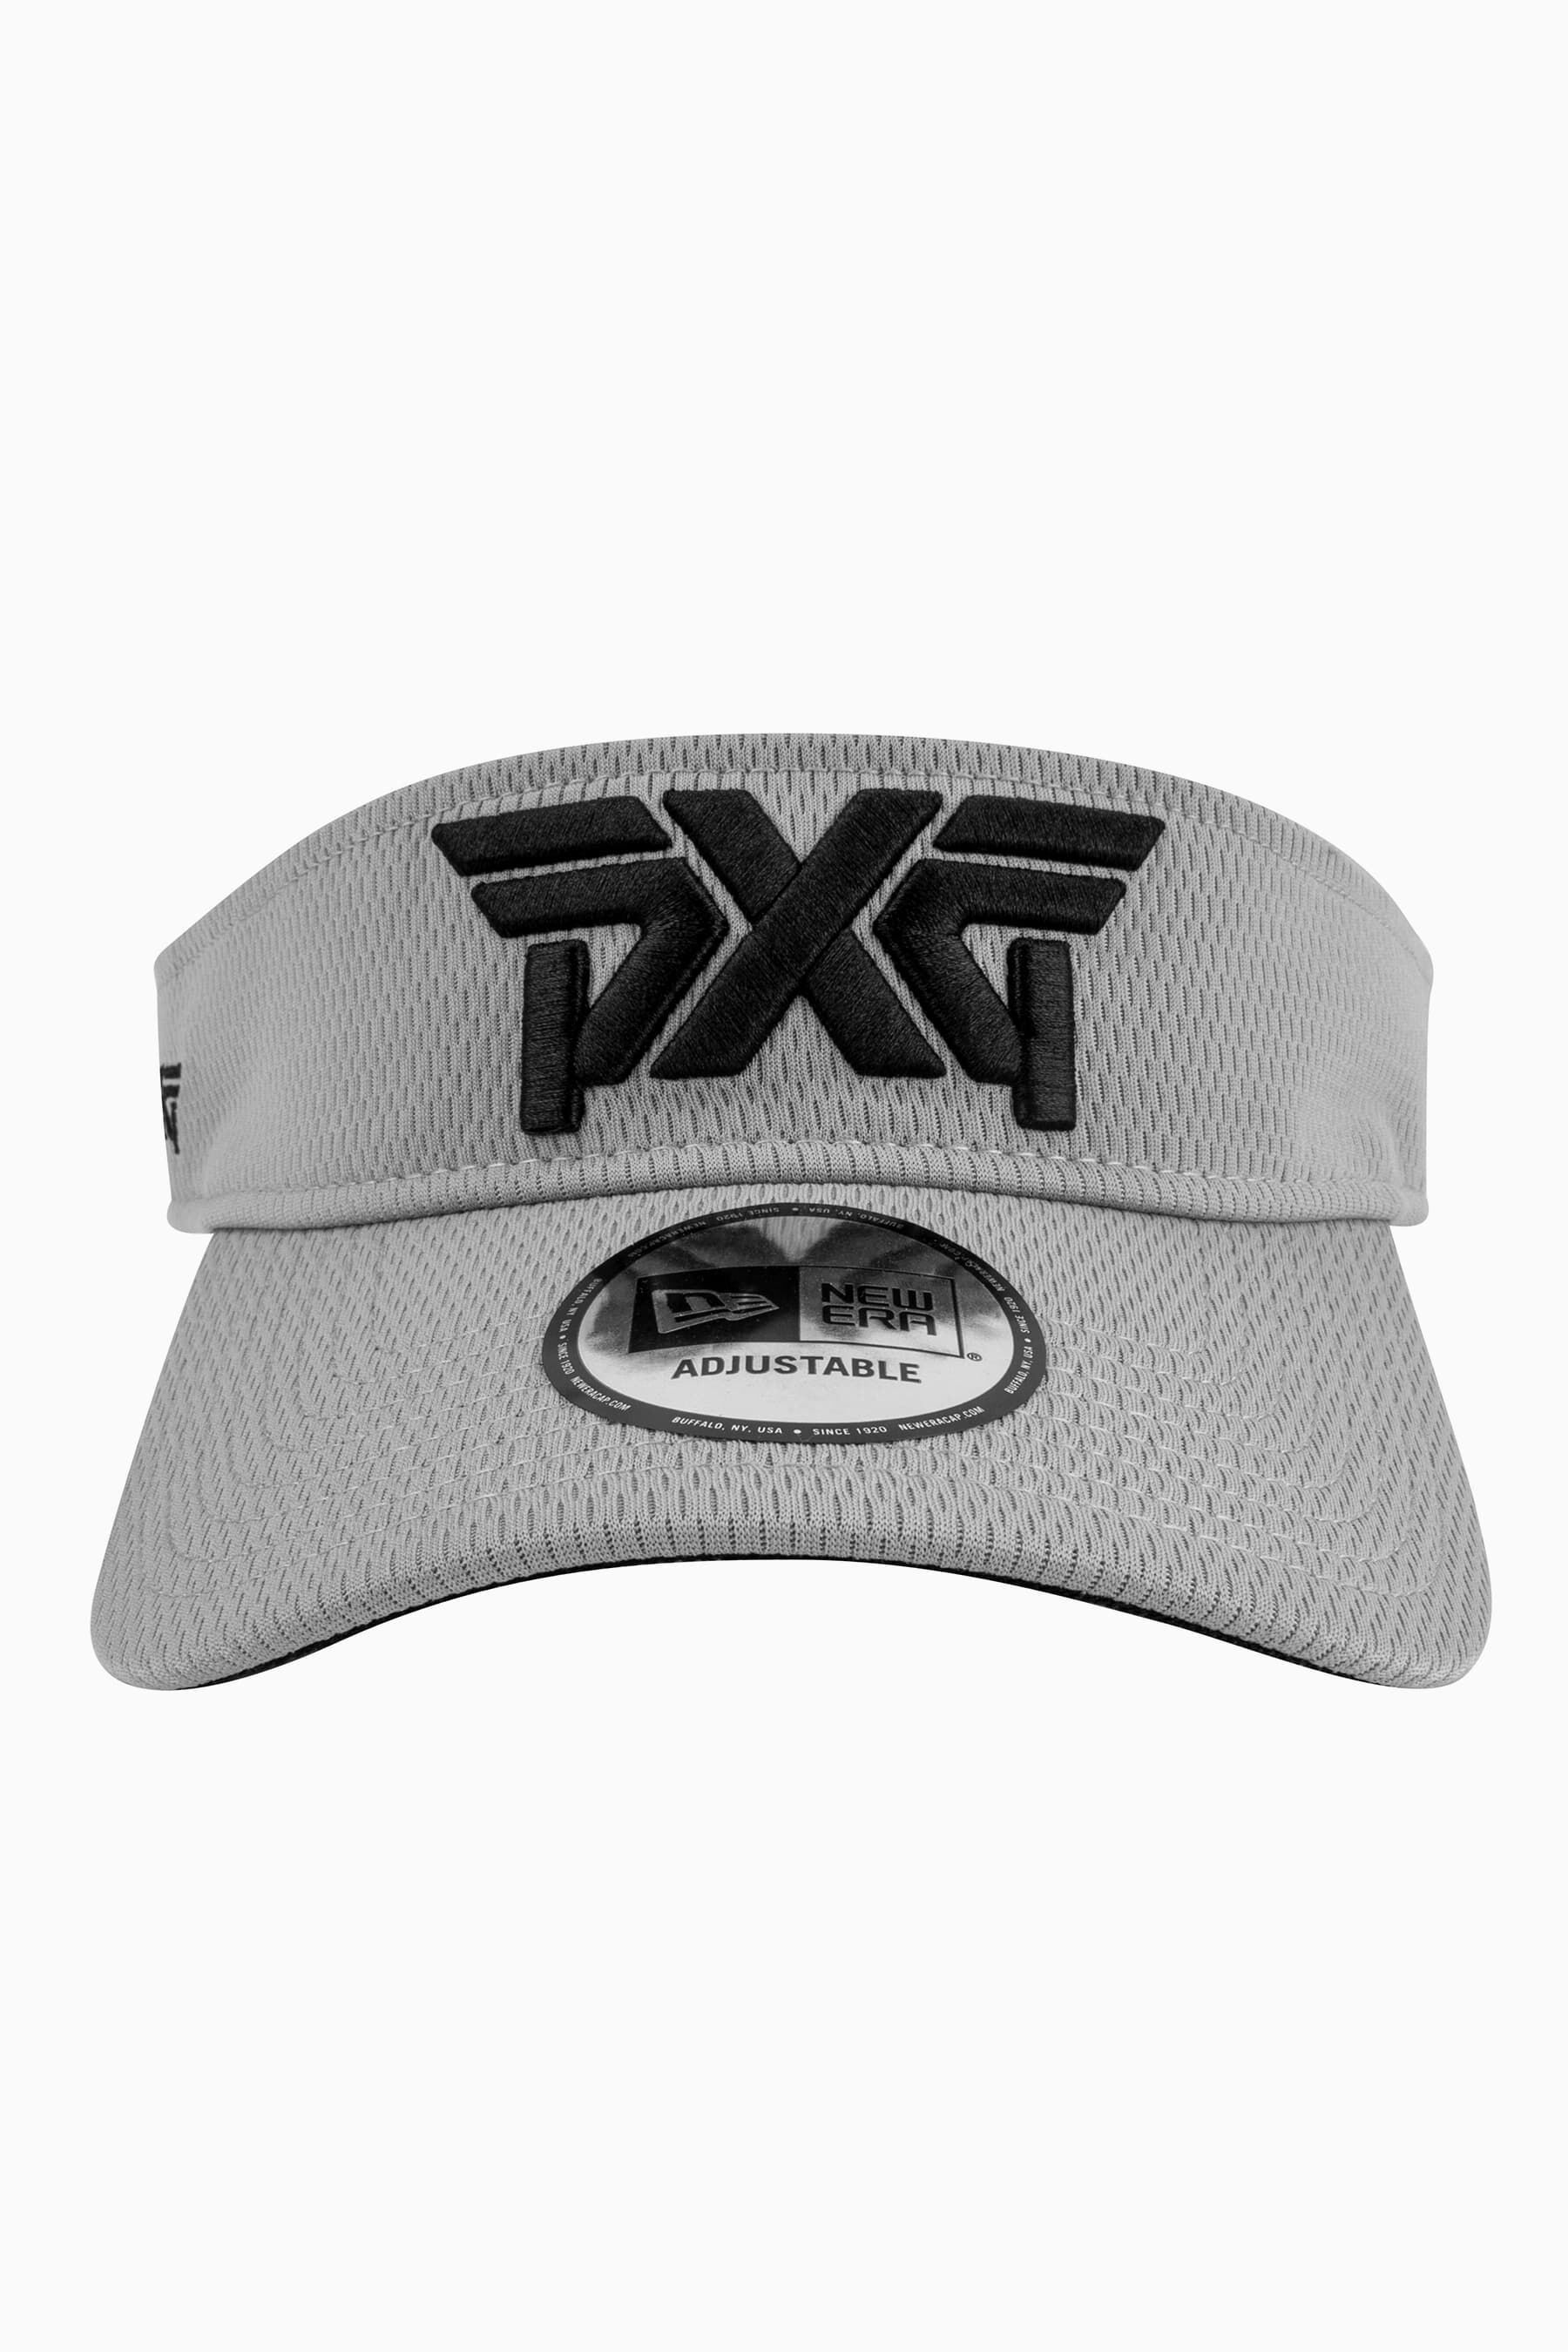 Performance Line Sport Visor | Golf Hats | Shop Caps, Visors 